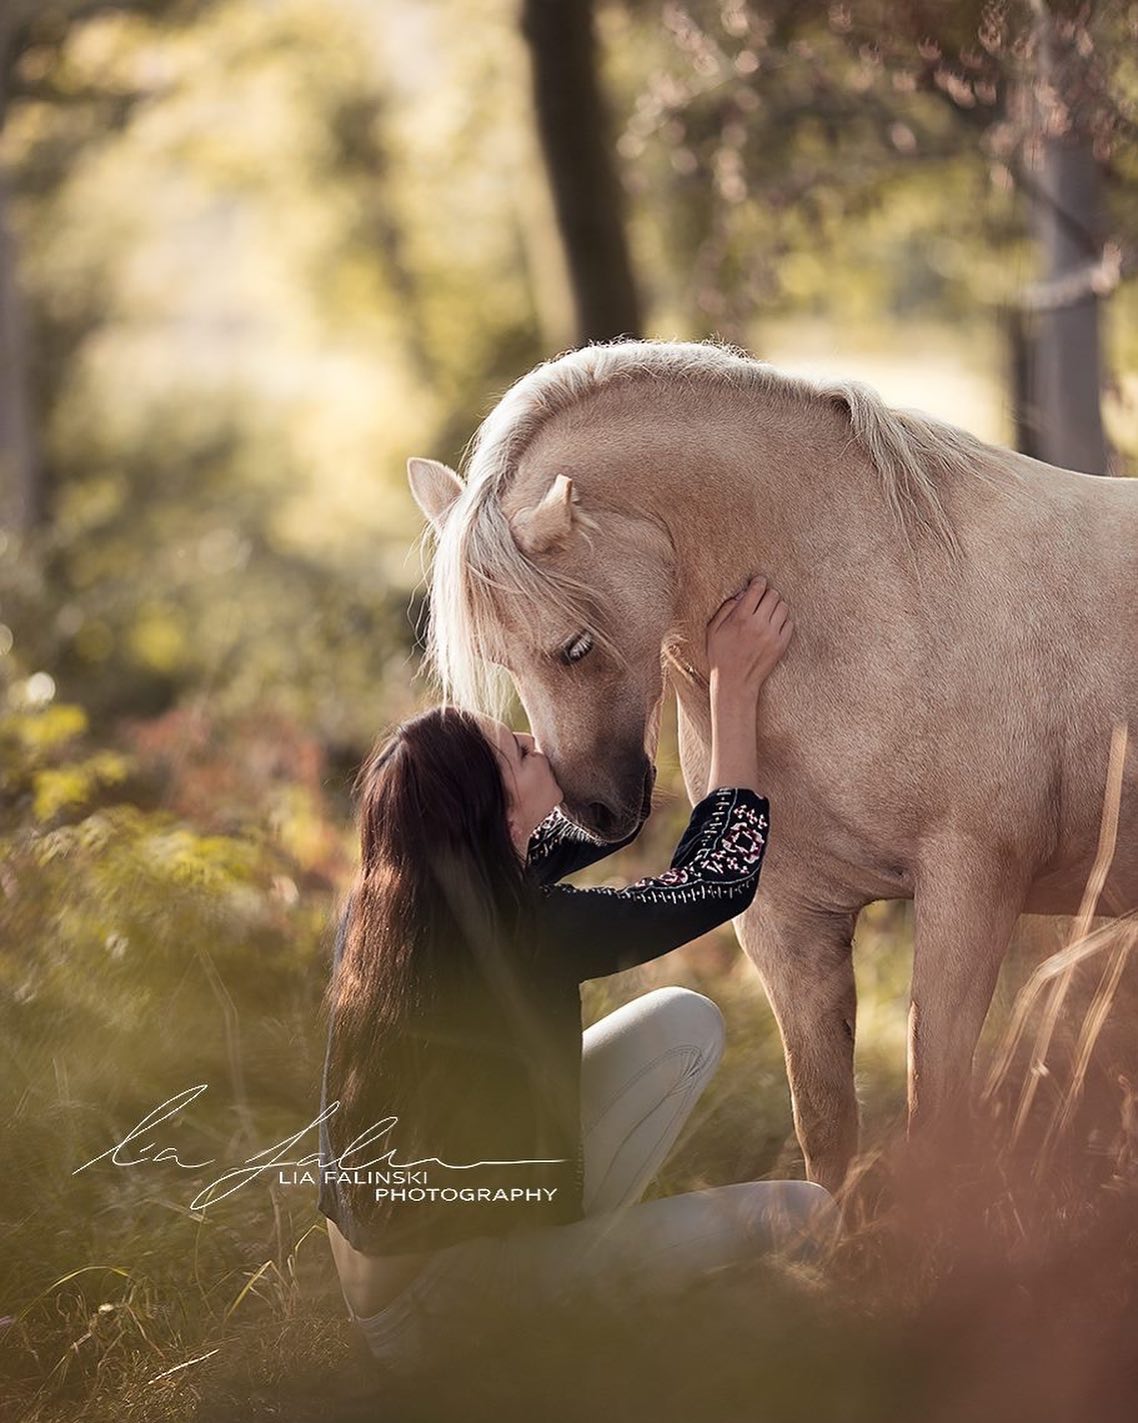 Lisa Falinski - Horse Photography